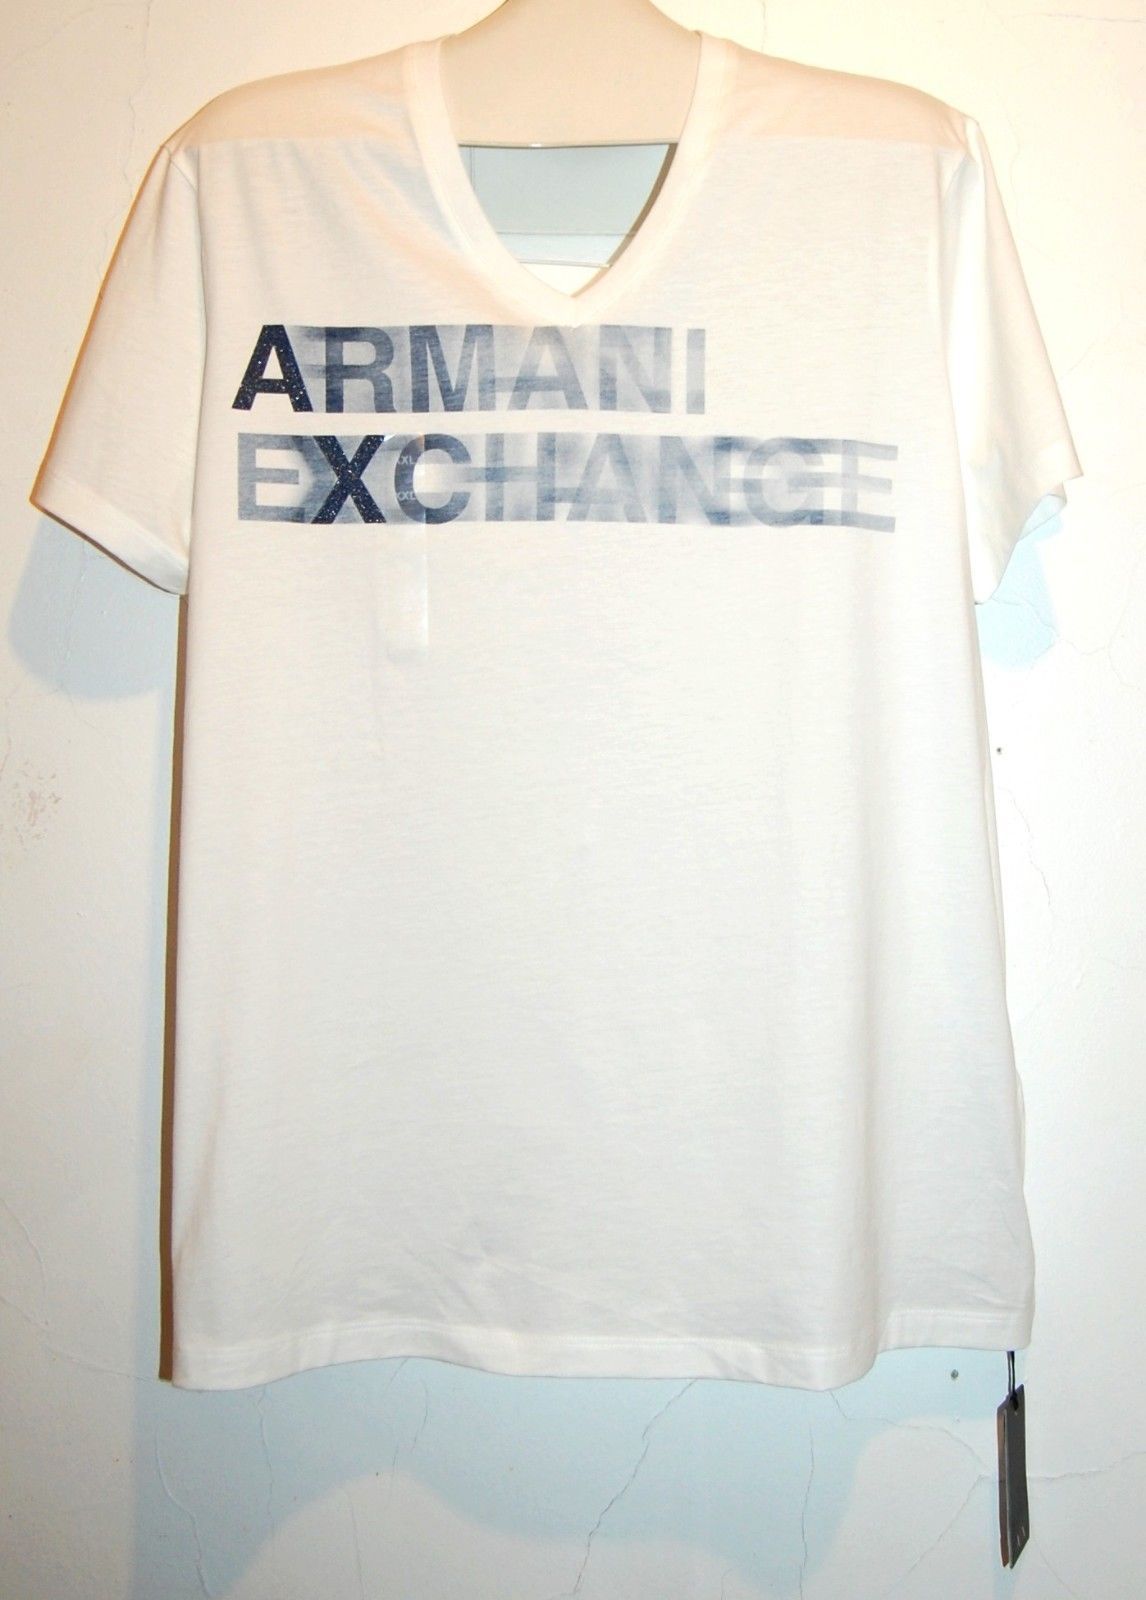 armani exchange t shirts price